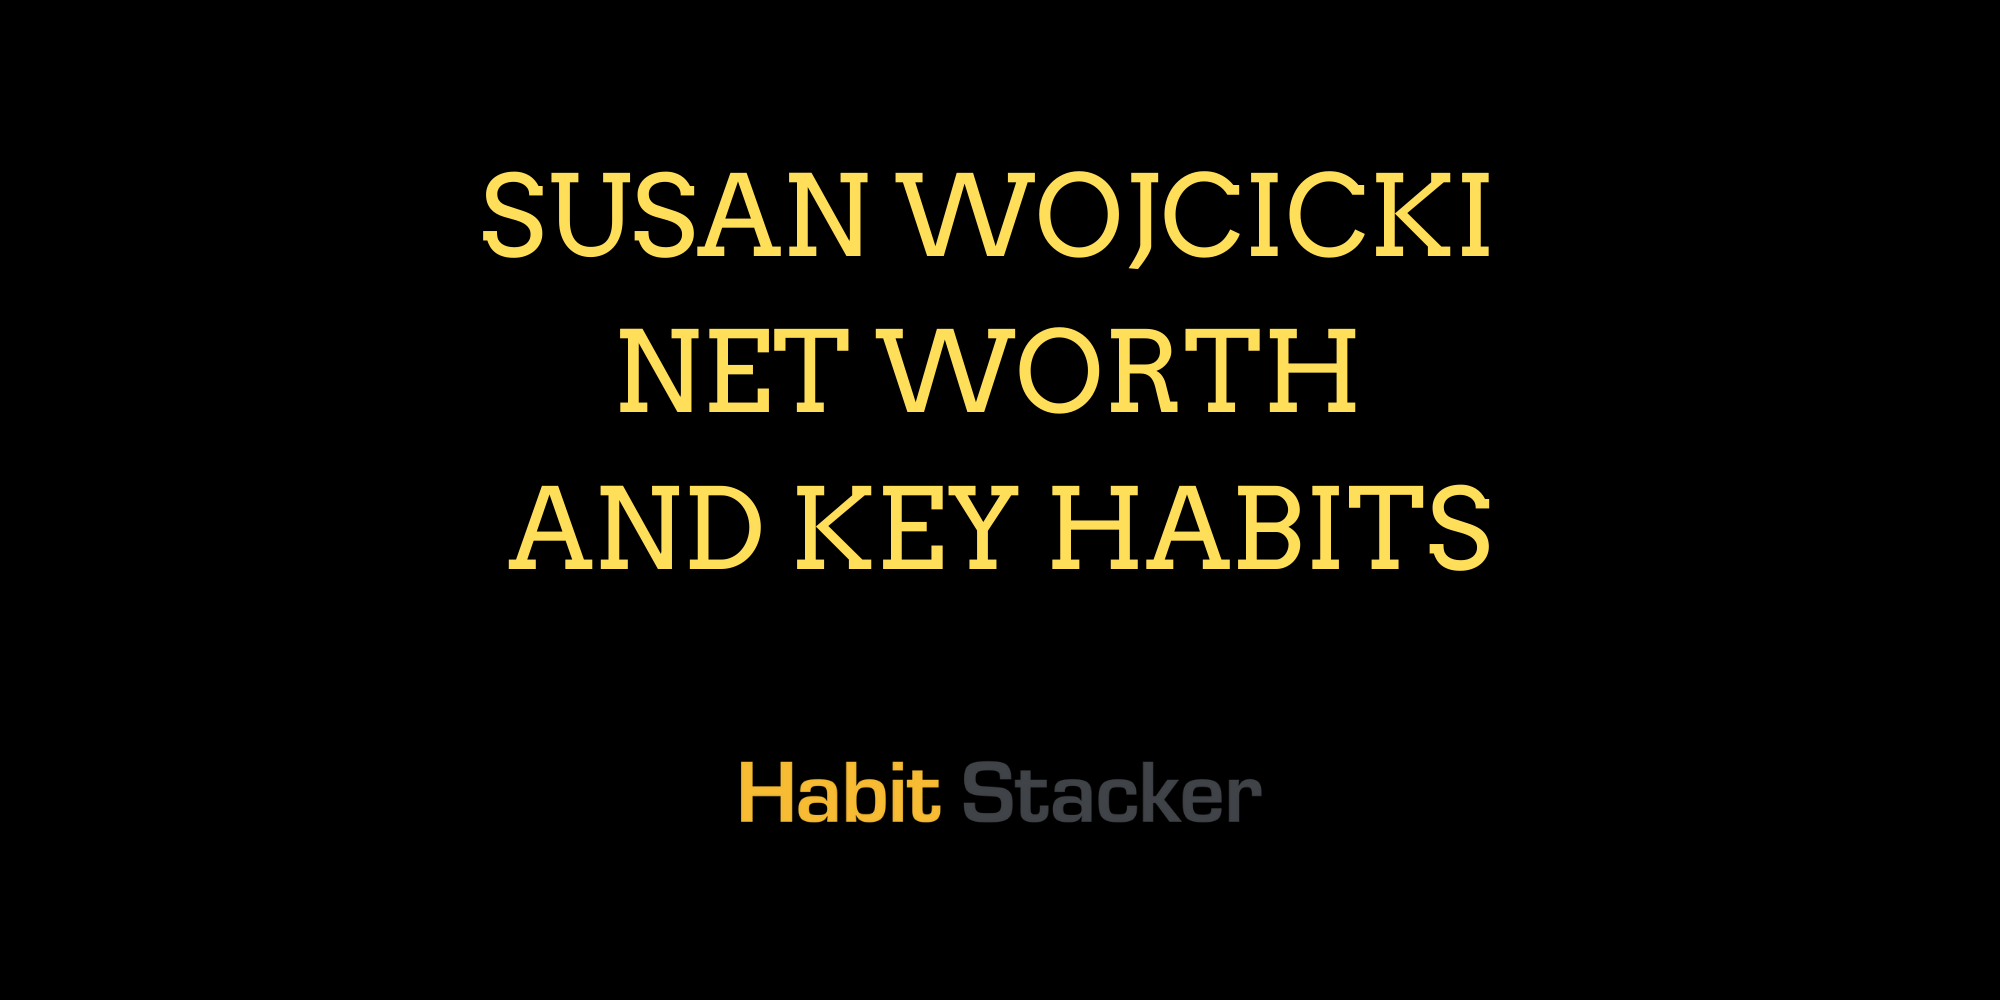 Susan Wojcicki Net Worth and Key Habits